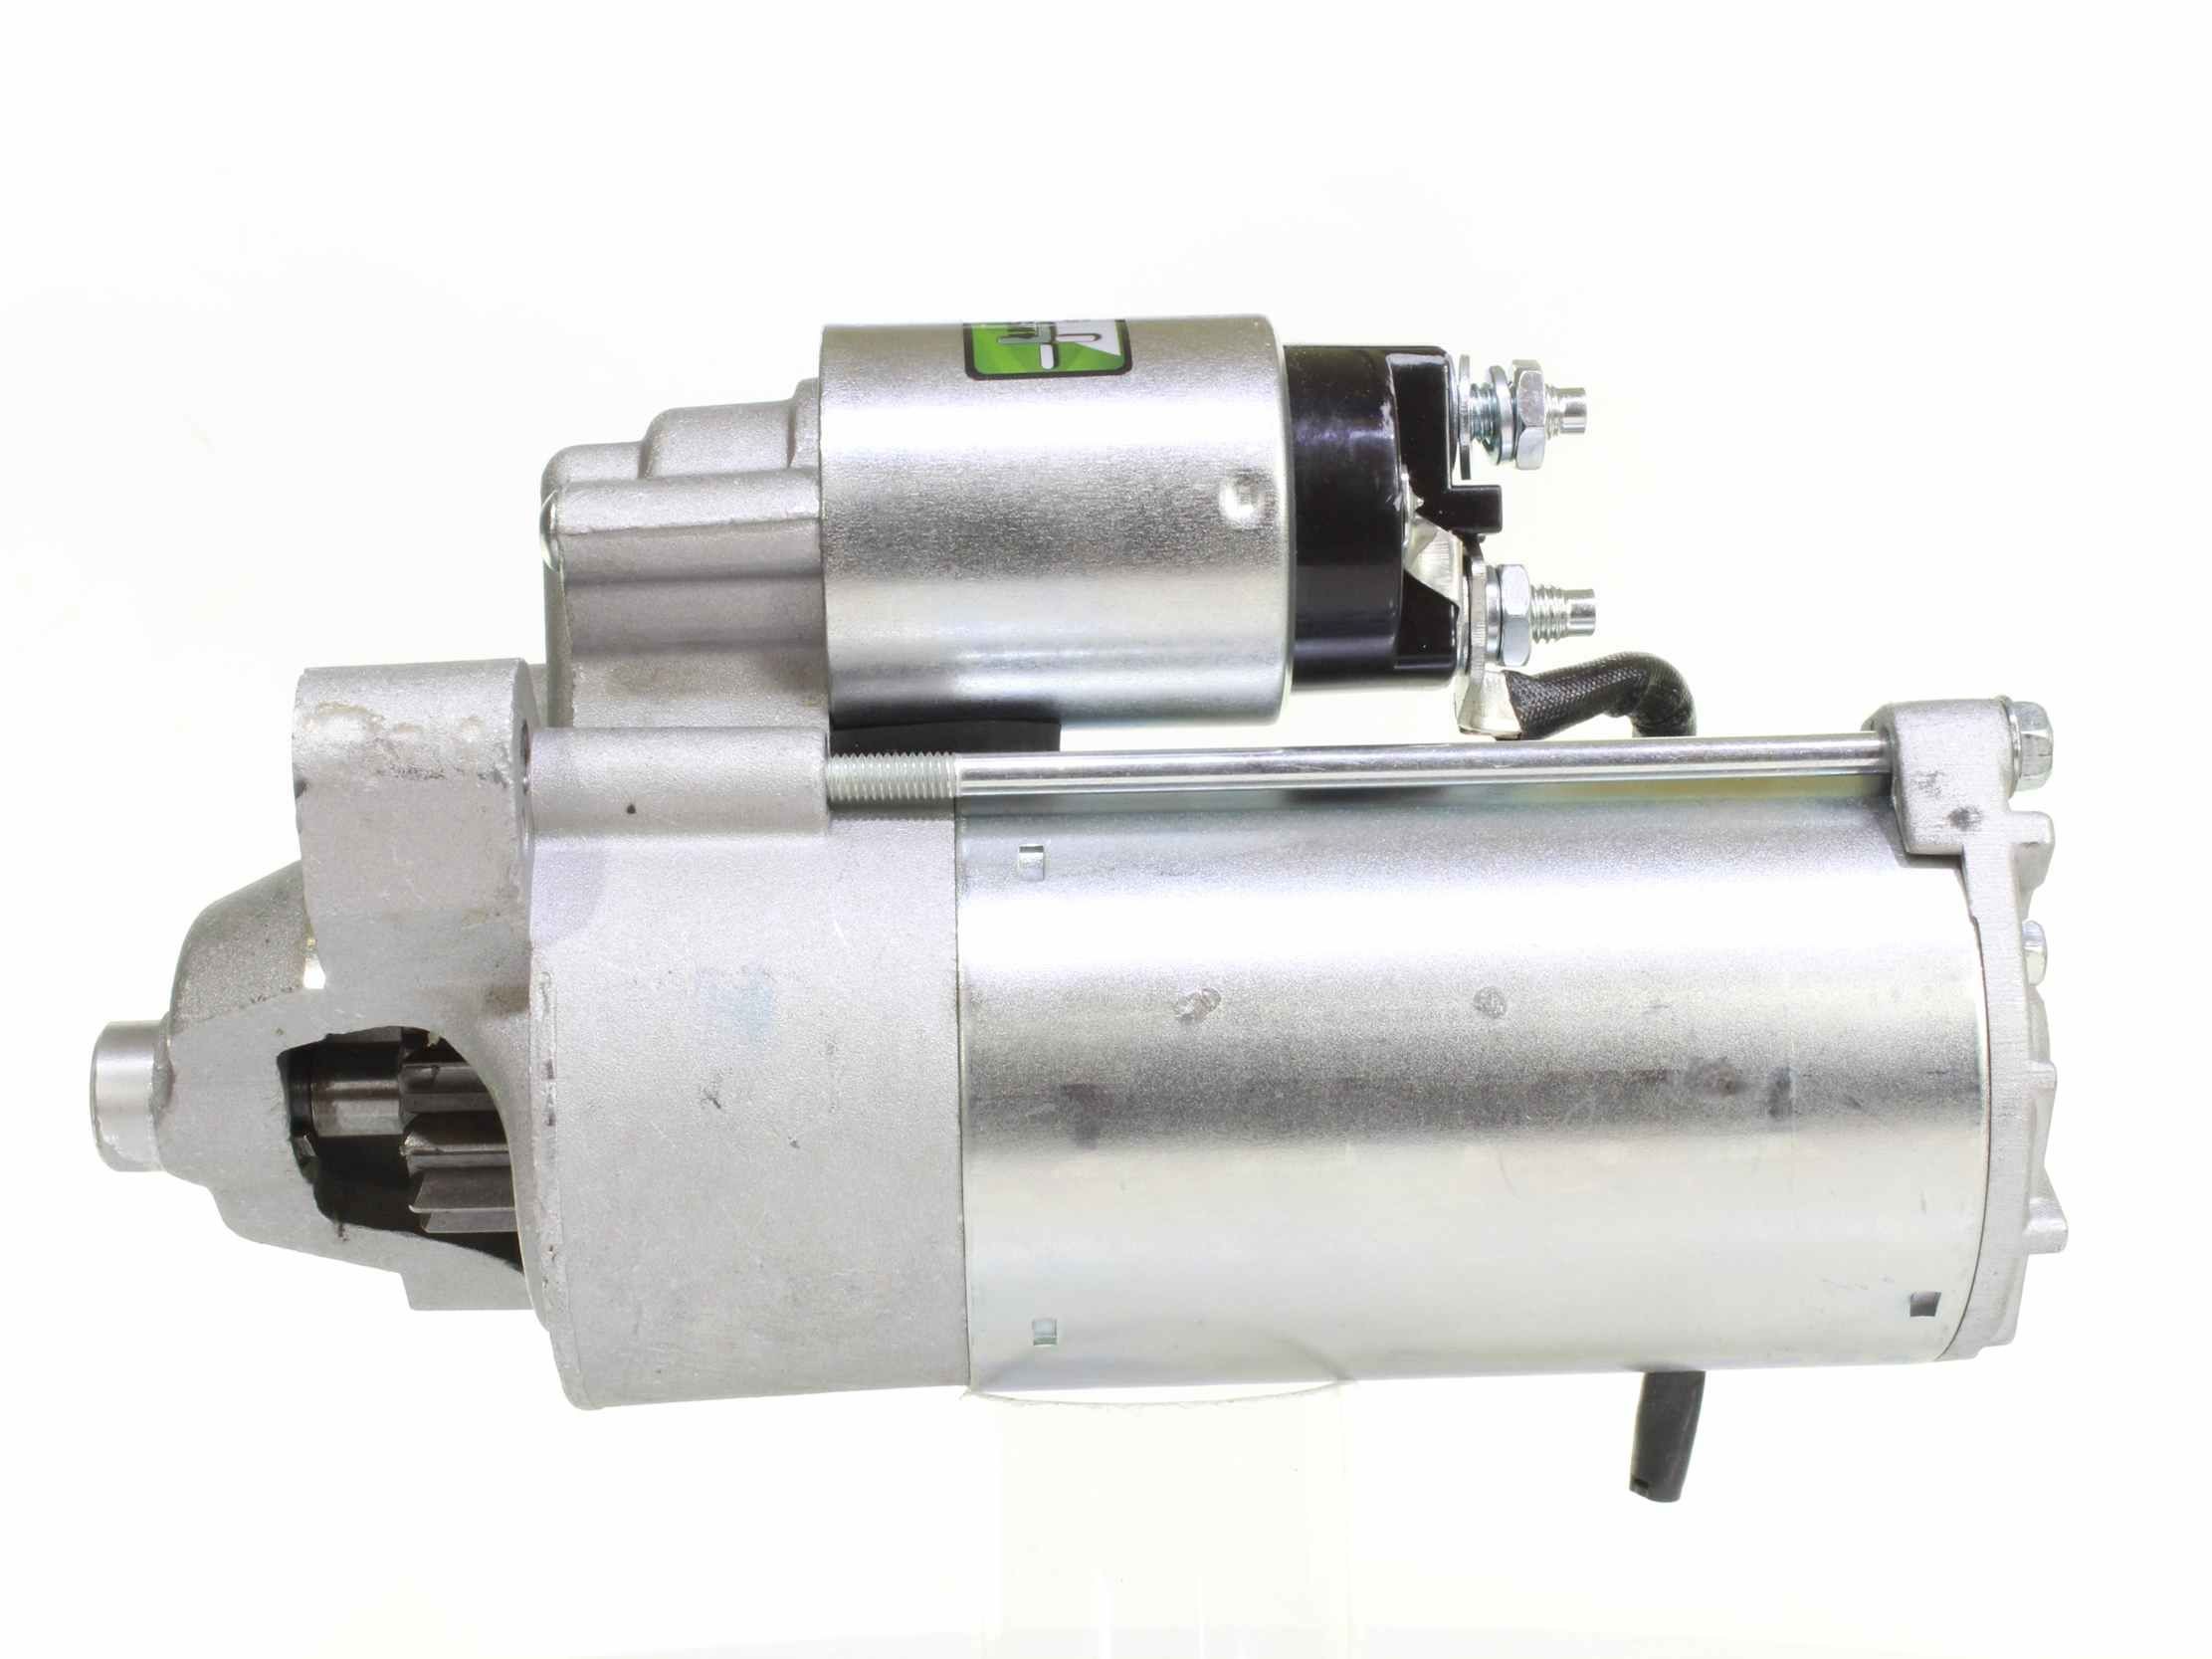 10439866 Engine starter motor ALANKO STR82456 review and test